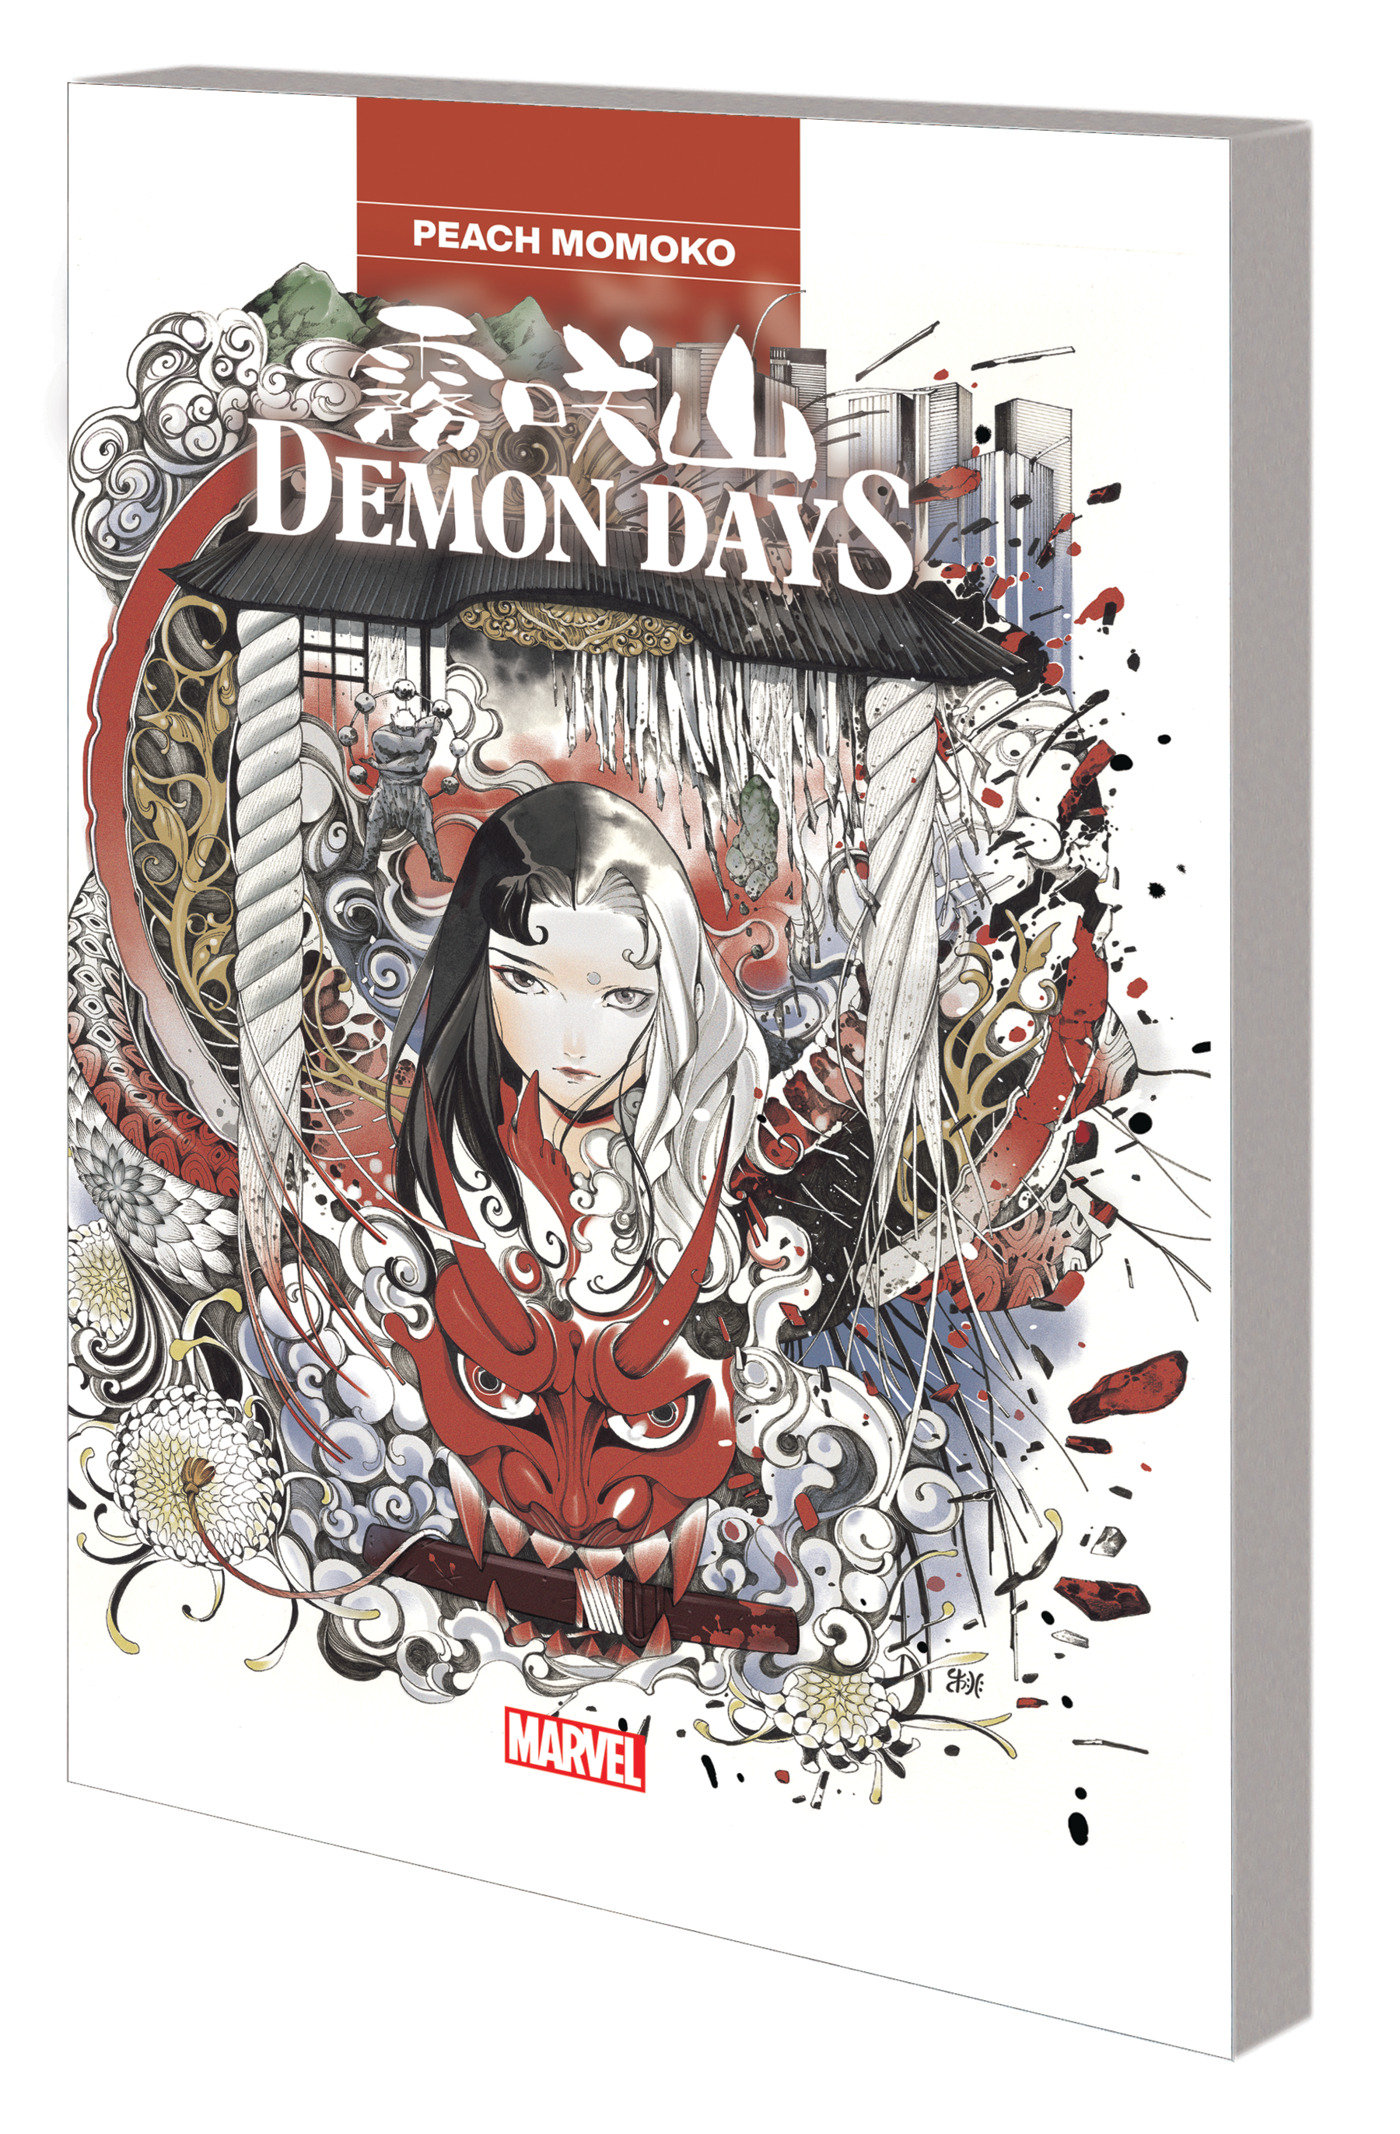 Demon Days Graphic Novel